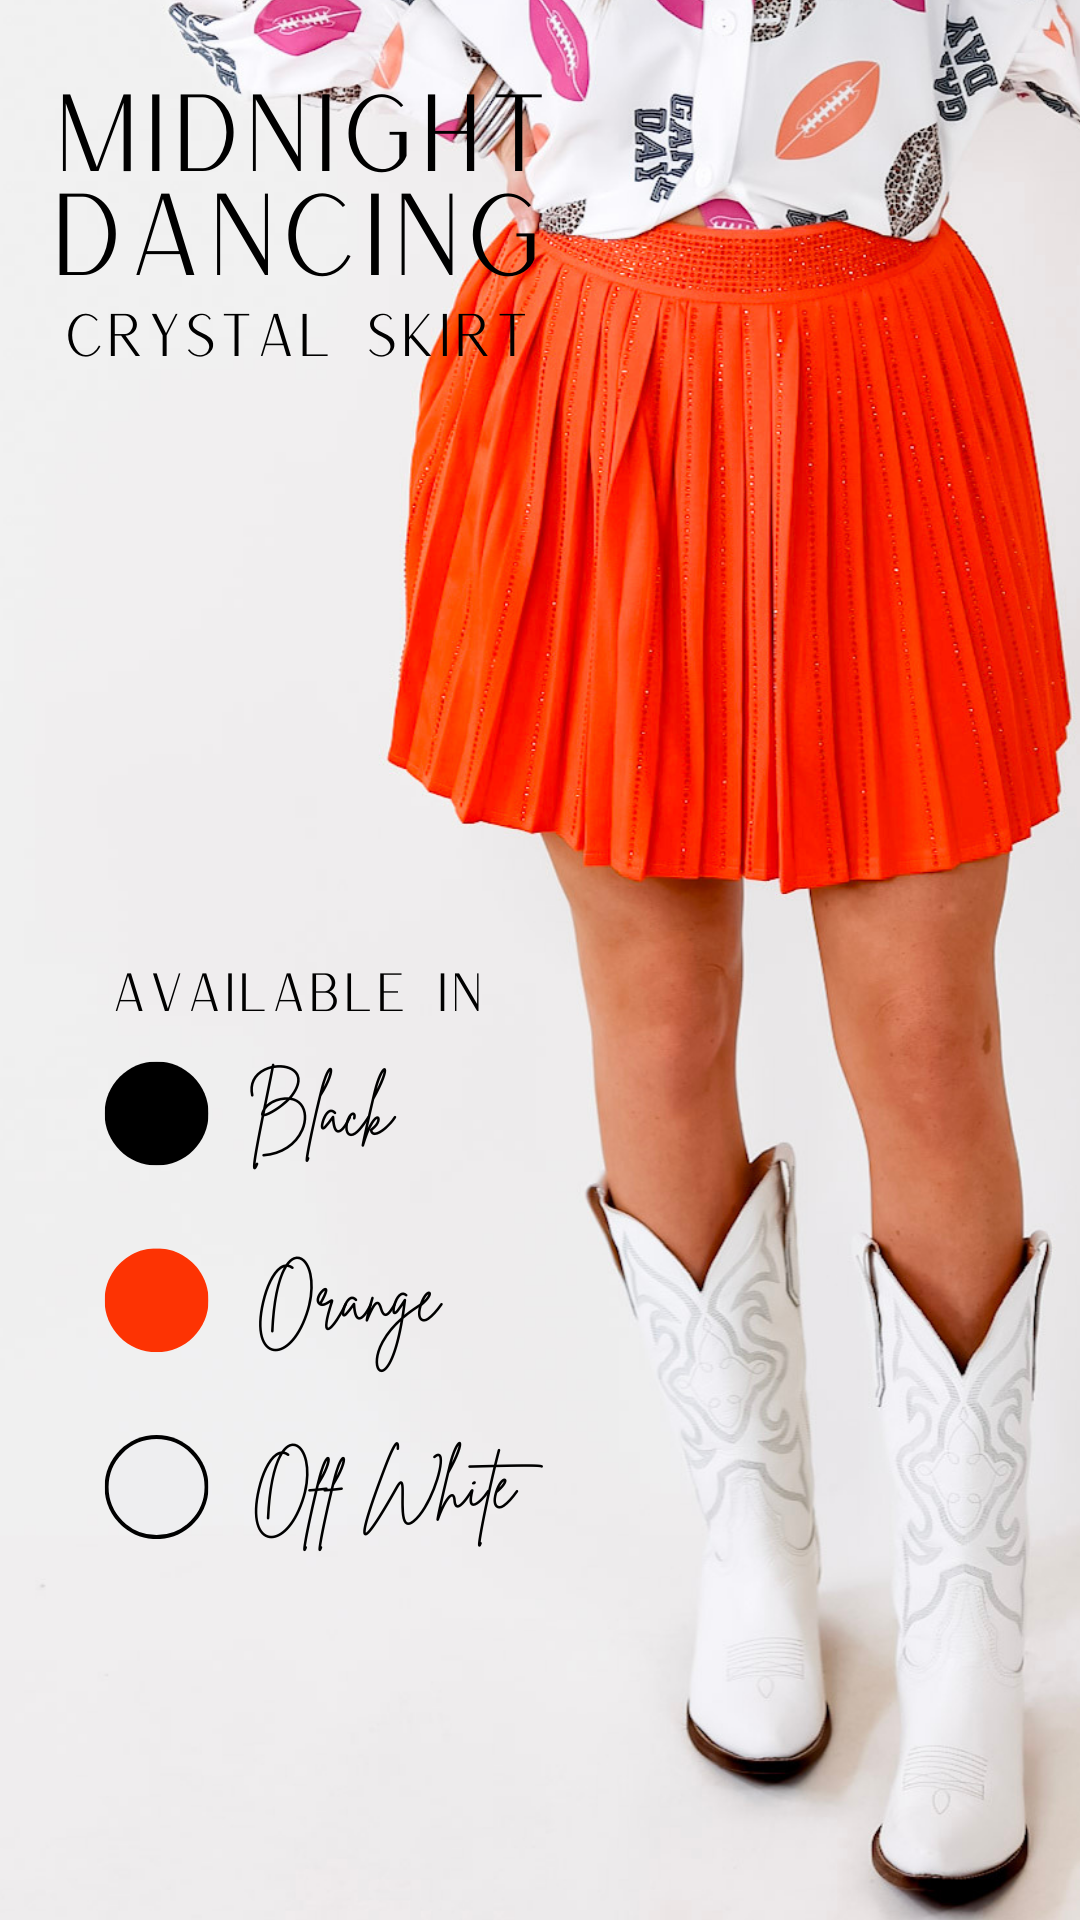 Midnight Dancing Crystal Skirt in Orange